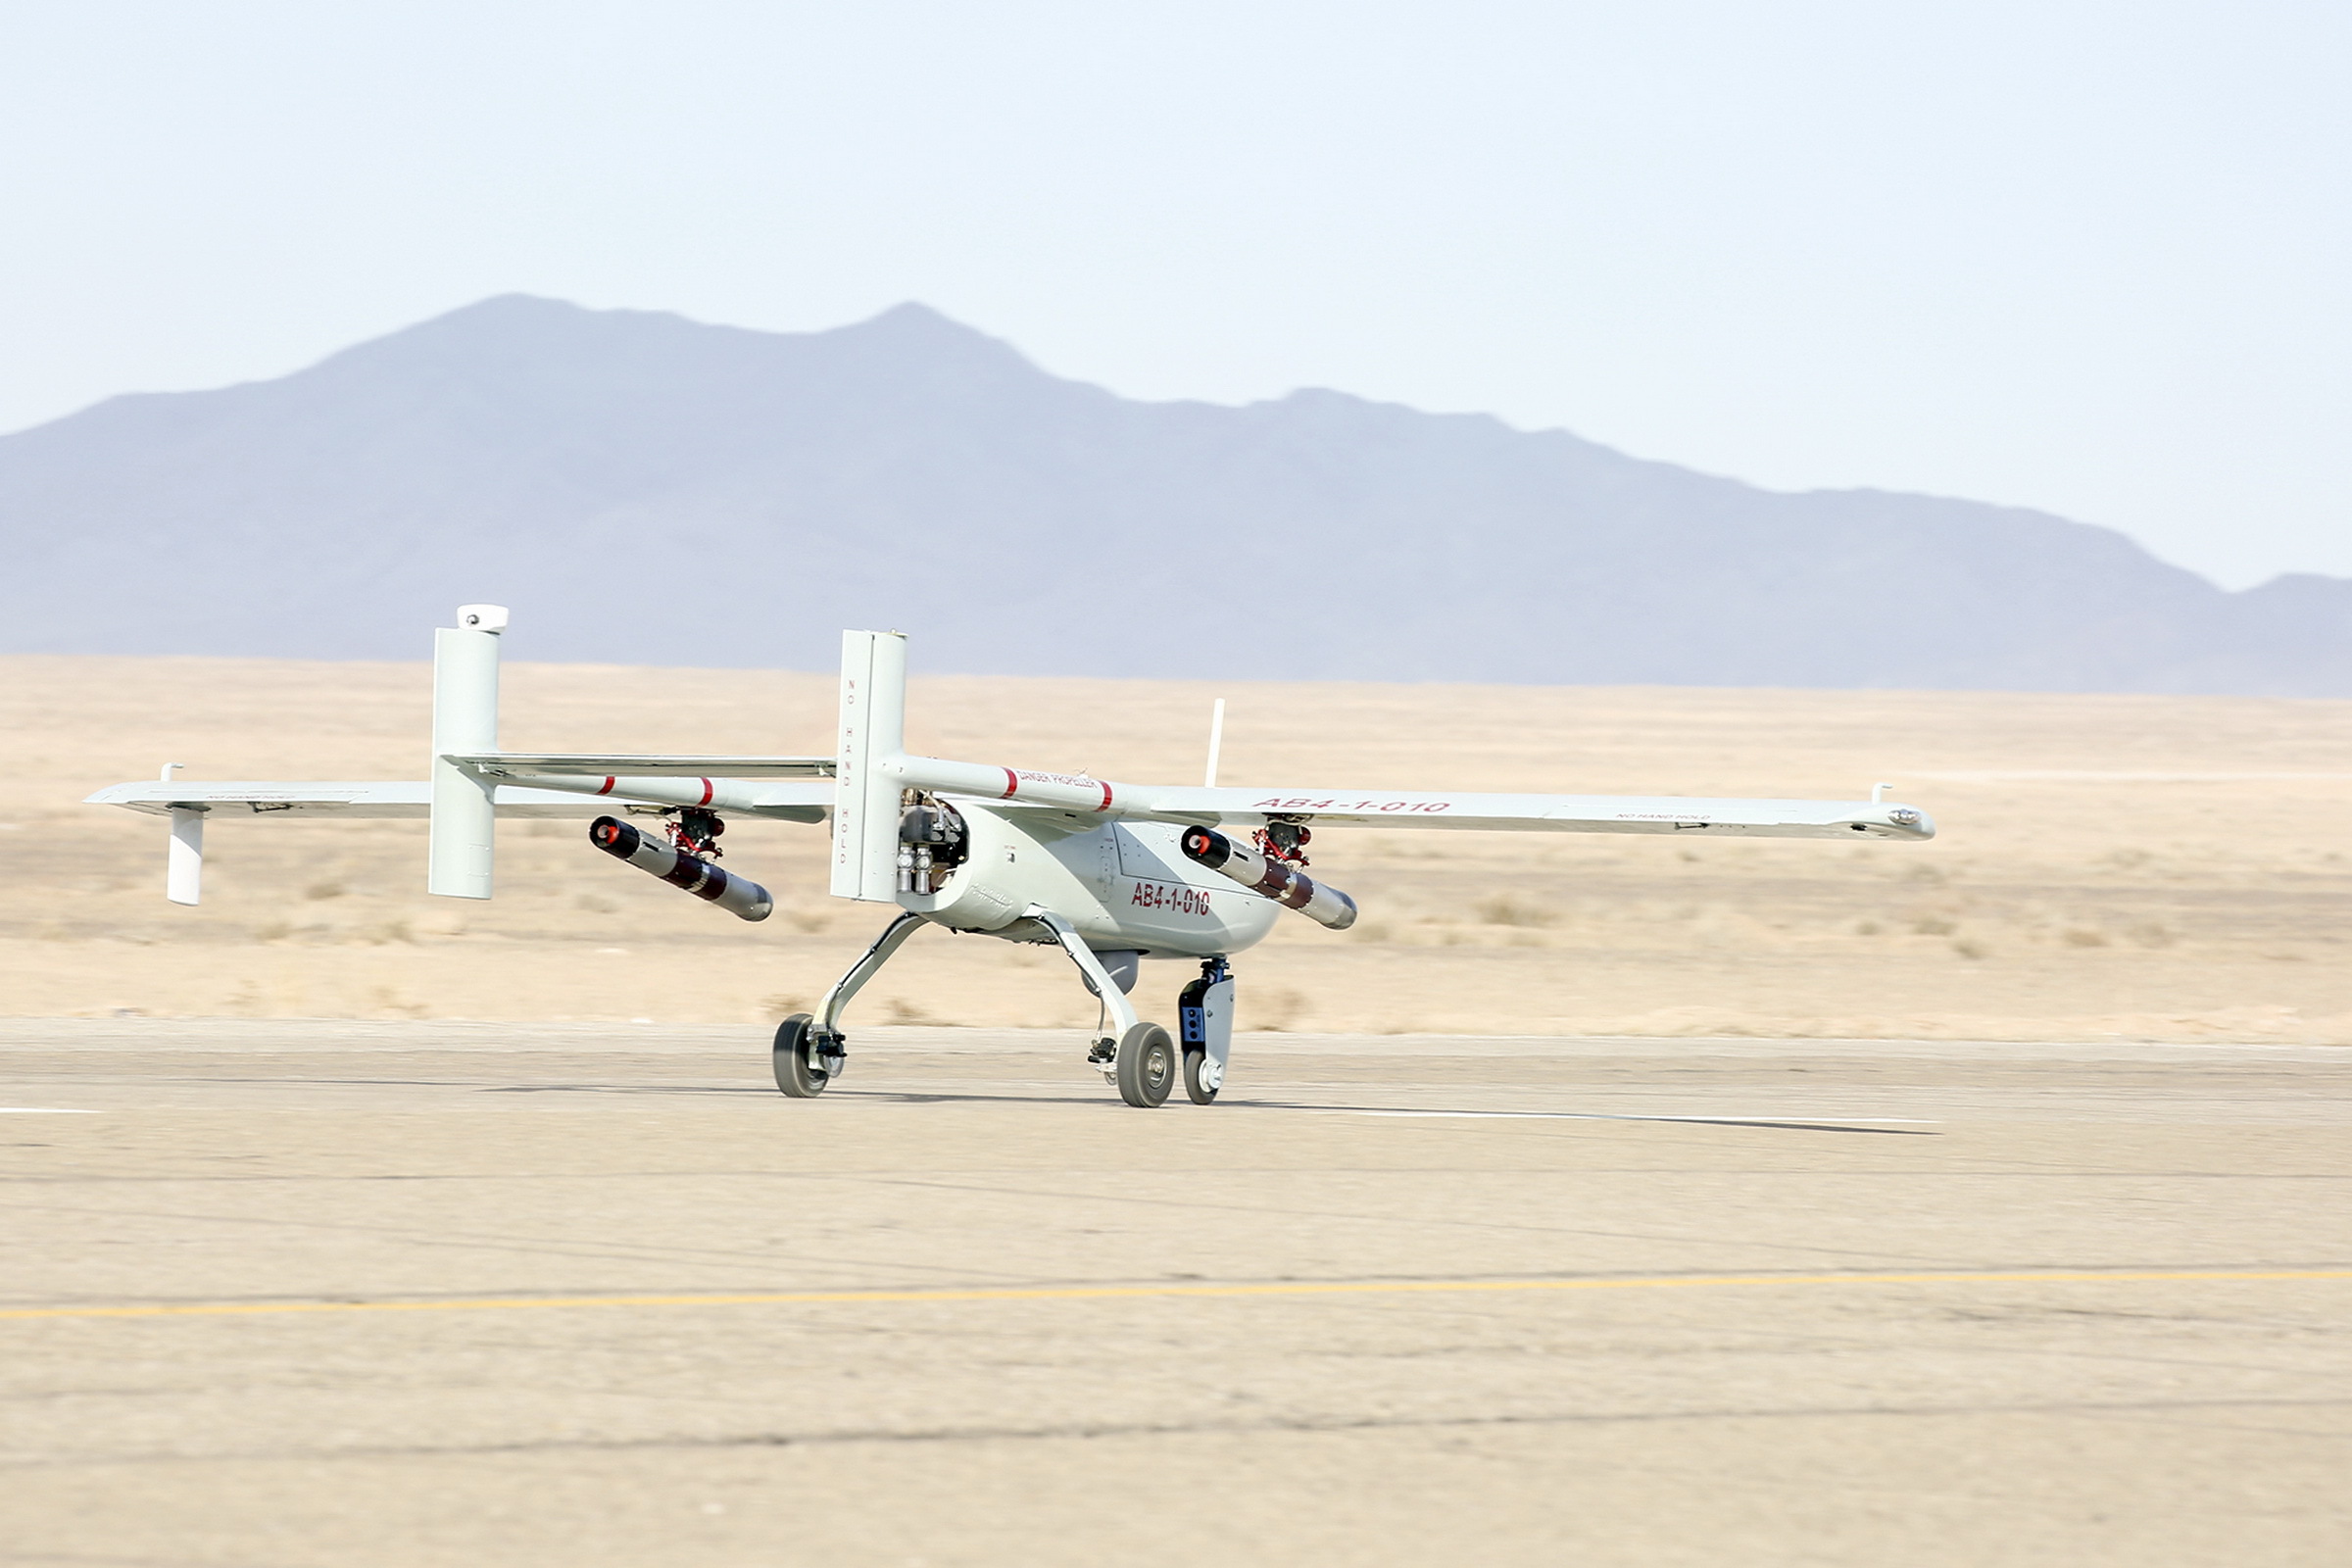 Shahed-136 Drone (“Geran-2”)